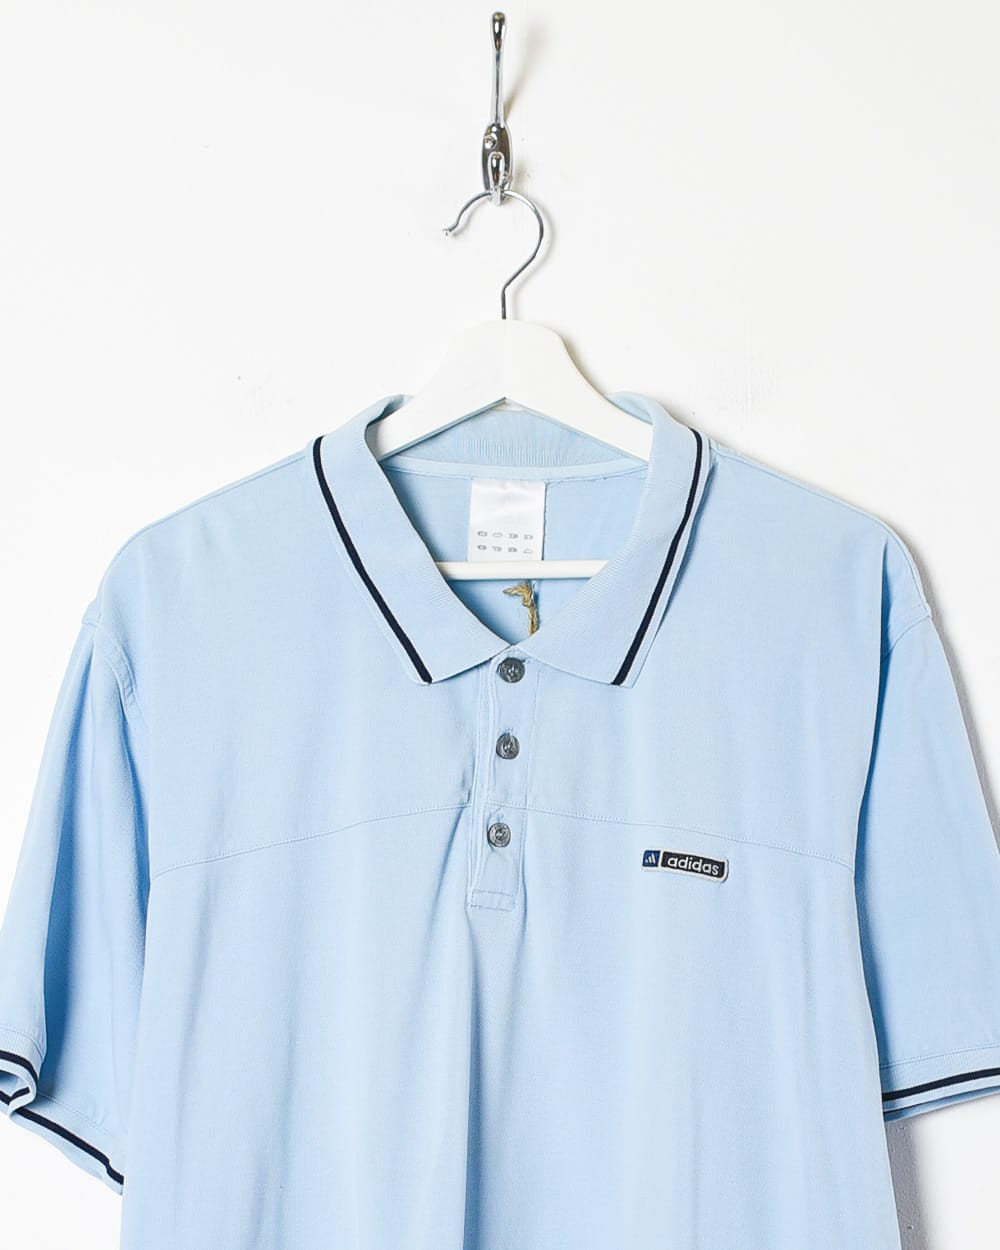 Baby Adidas Polo Shirt - Large